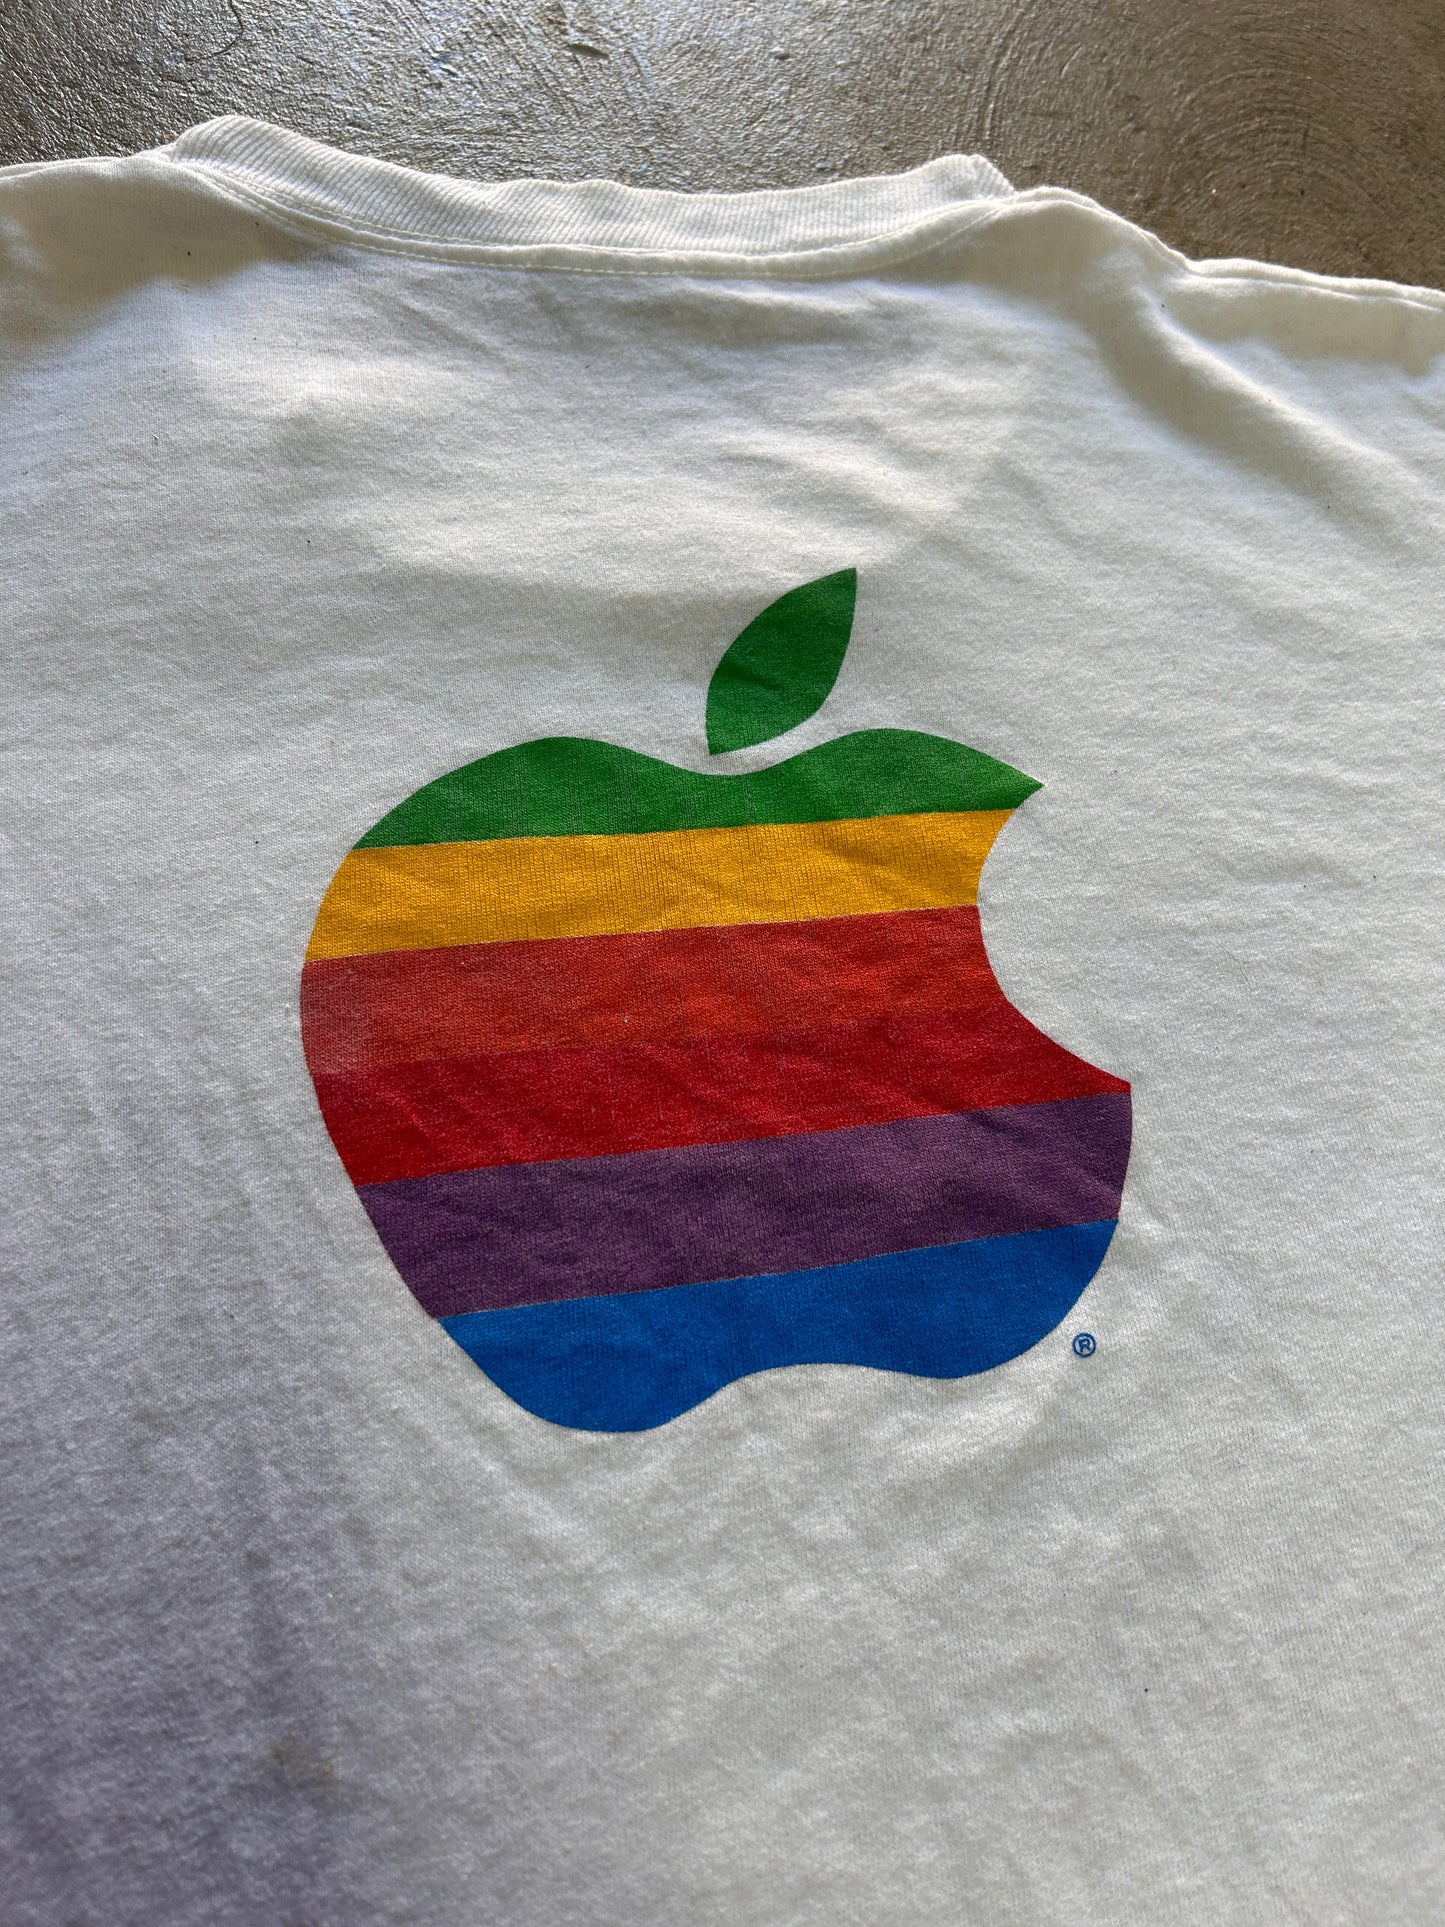 Vintage Apple Single Stitch T-Shirt - XL